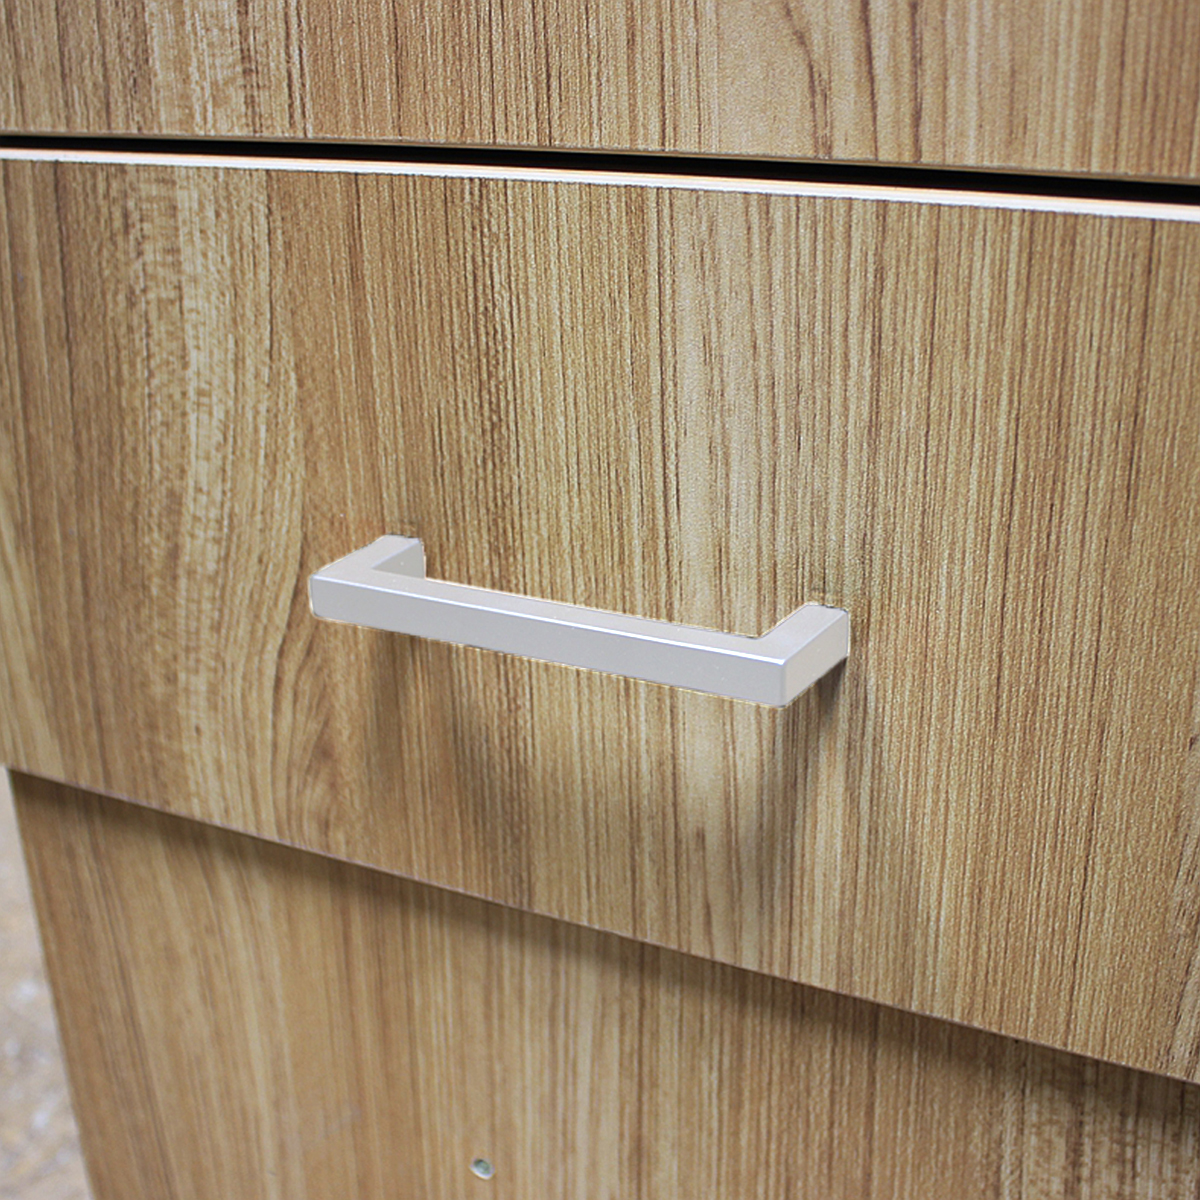 Stainless-Steel-Cabinet-Pull-Door-Handles-Kitchen-Cupboard-Drawer-Pulls-Knob-1366354